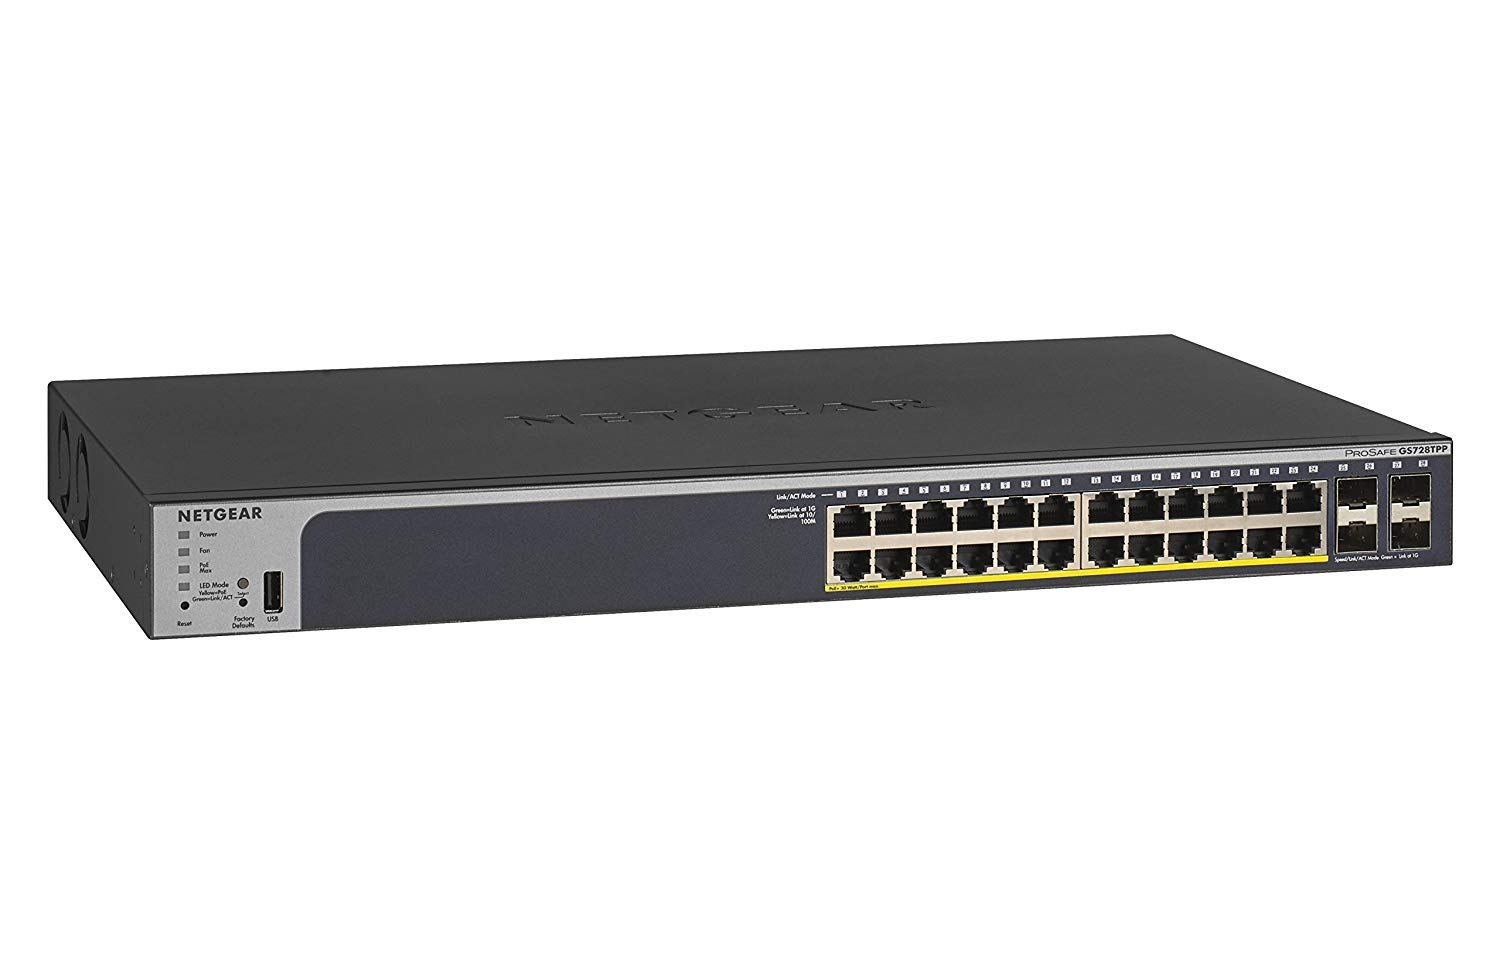 NETGEAR GS728TPP-100NAS 24-Port Gigabit Ethernet Smart Managed Pro Switch, PoE/PoE+, 439W, 4 SFP+, ProSAFE Lifetime Protection (GS728TPP)